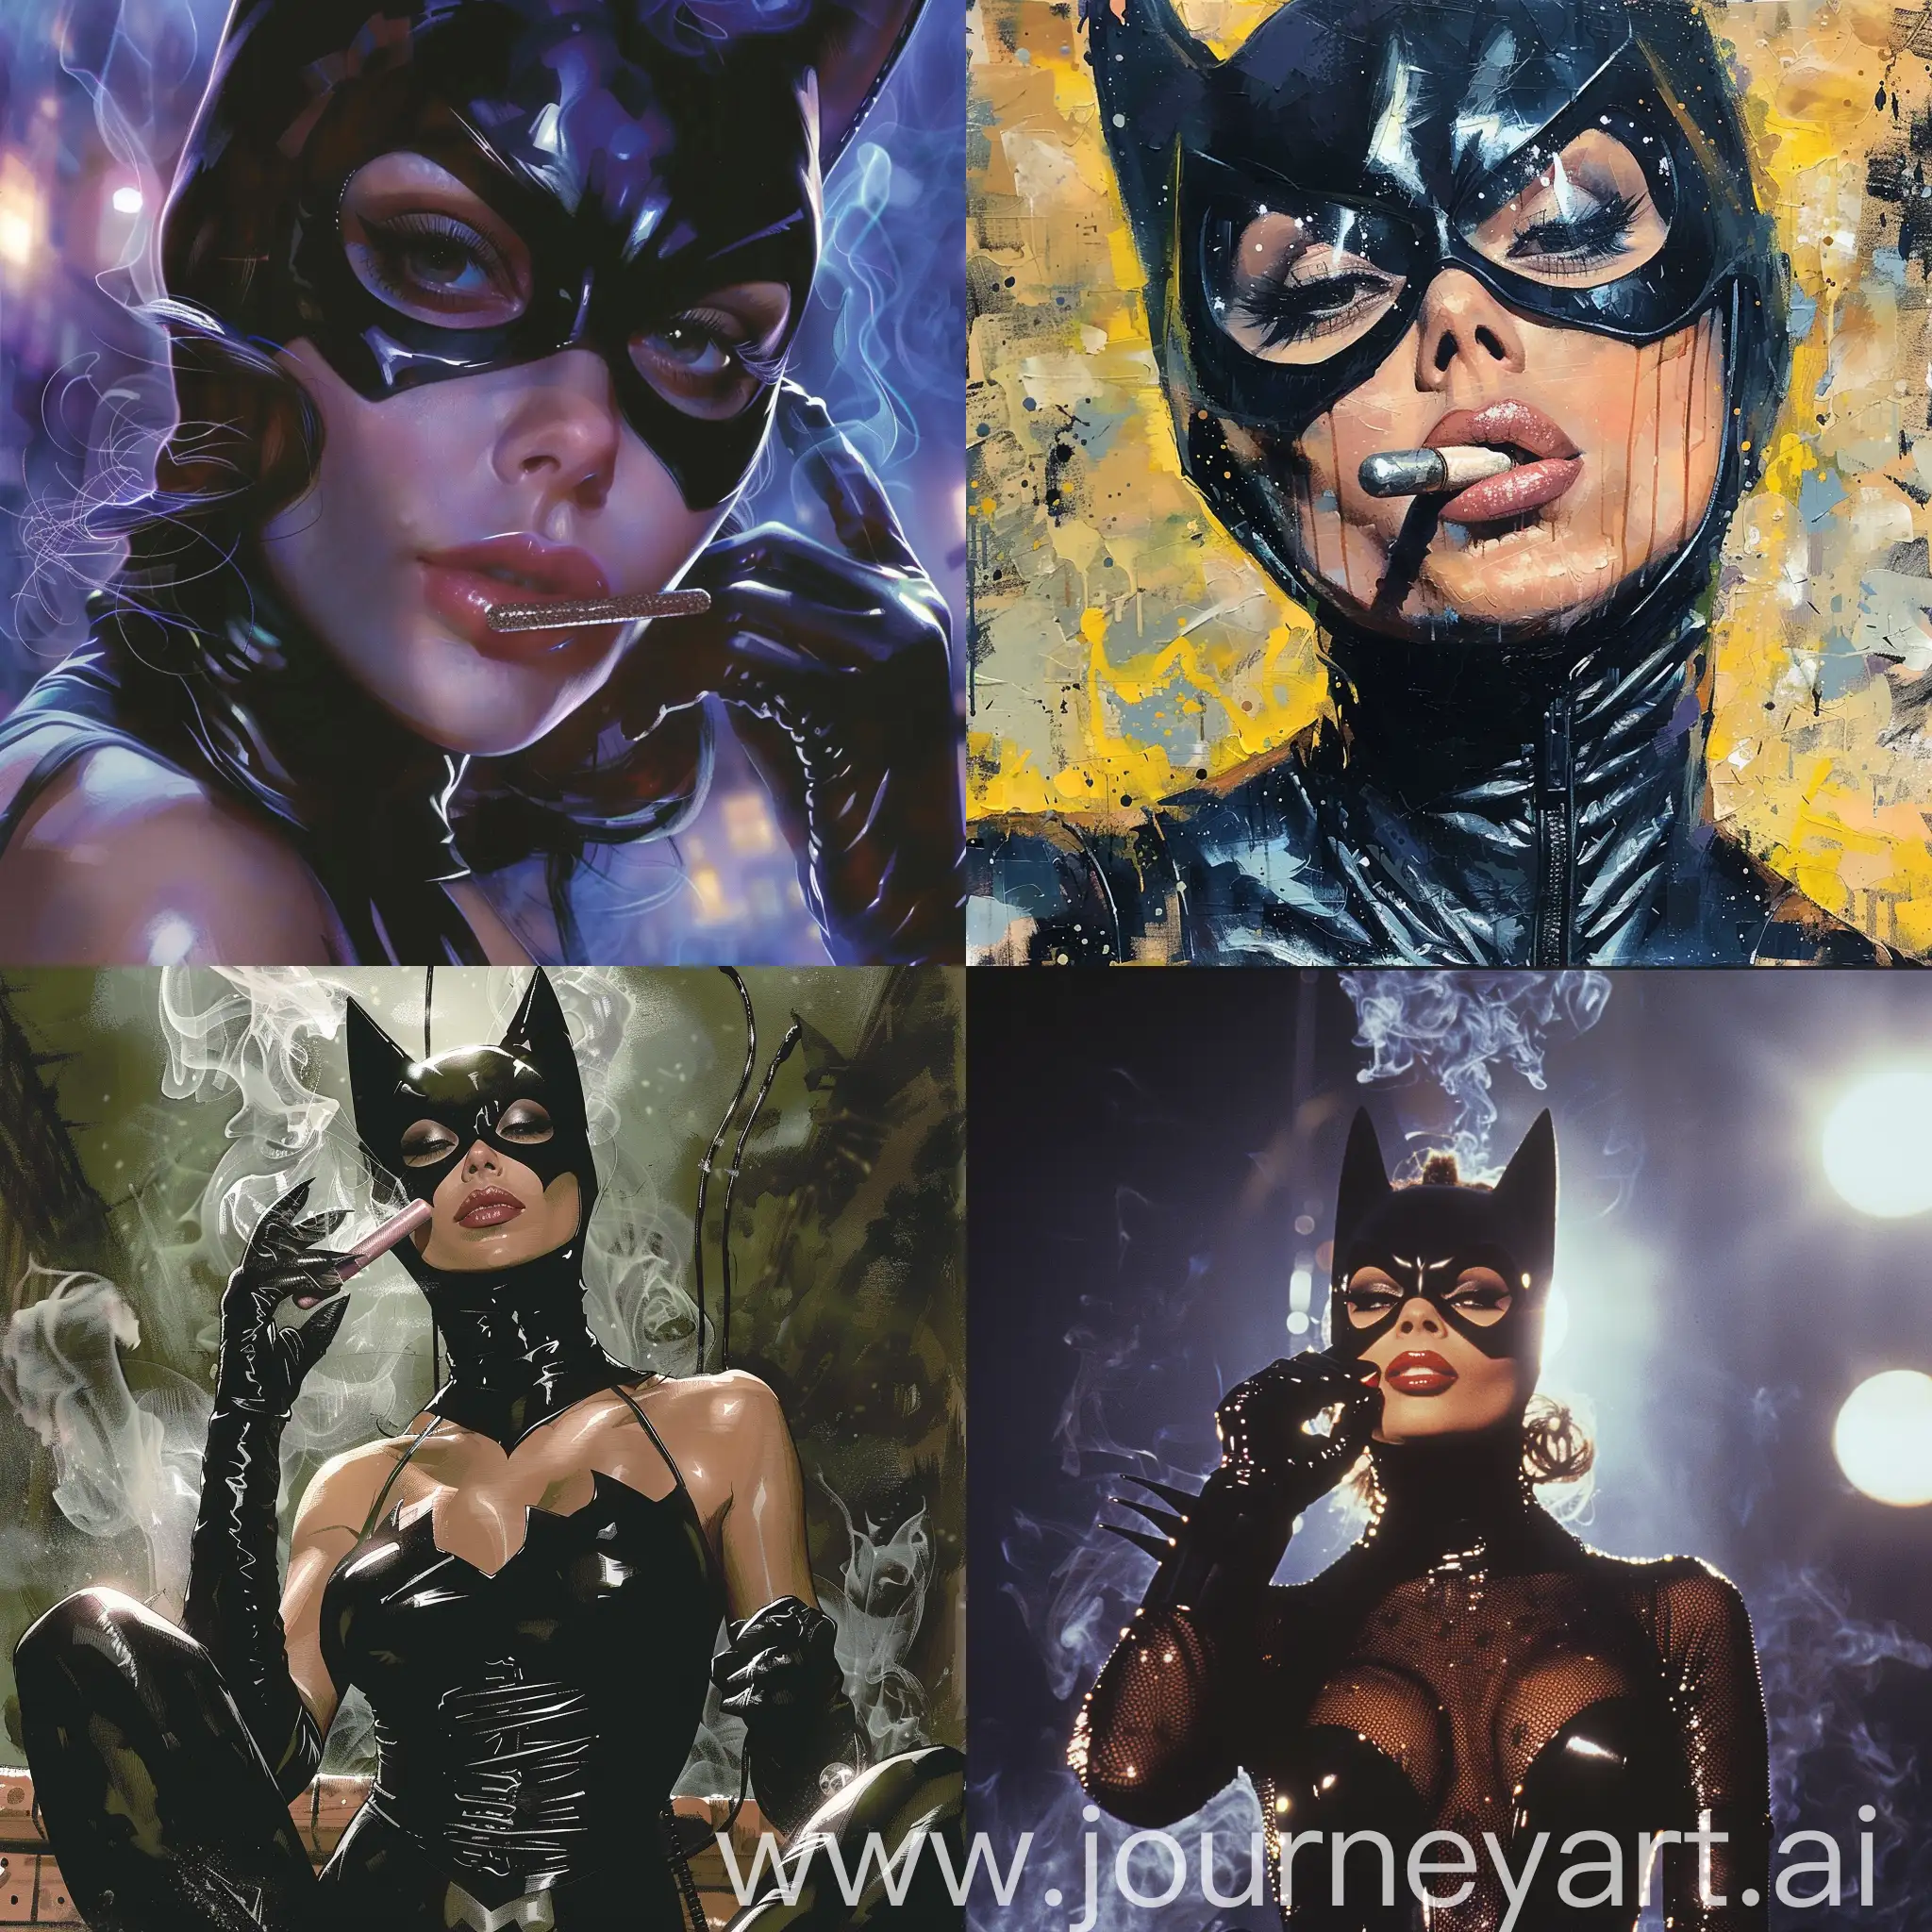 Sleek-Cocaine-Catwoman-Artwork-in-11-Aspect-Ratio